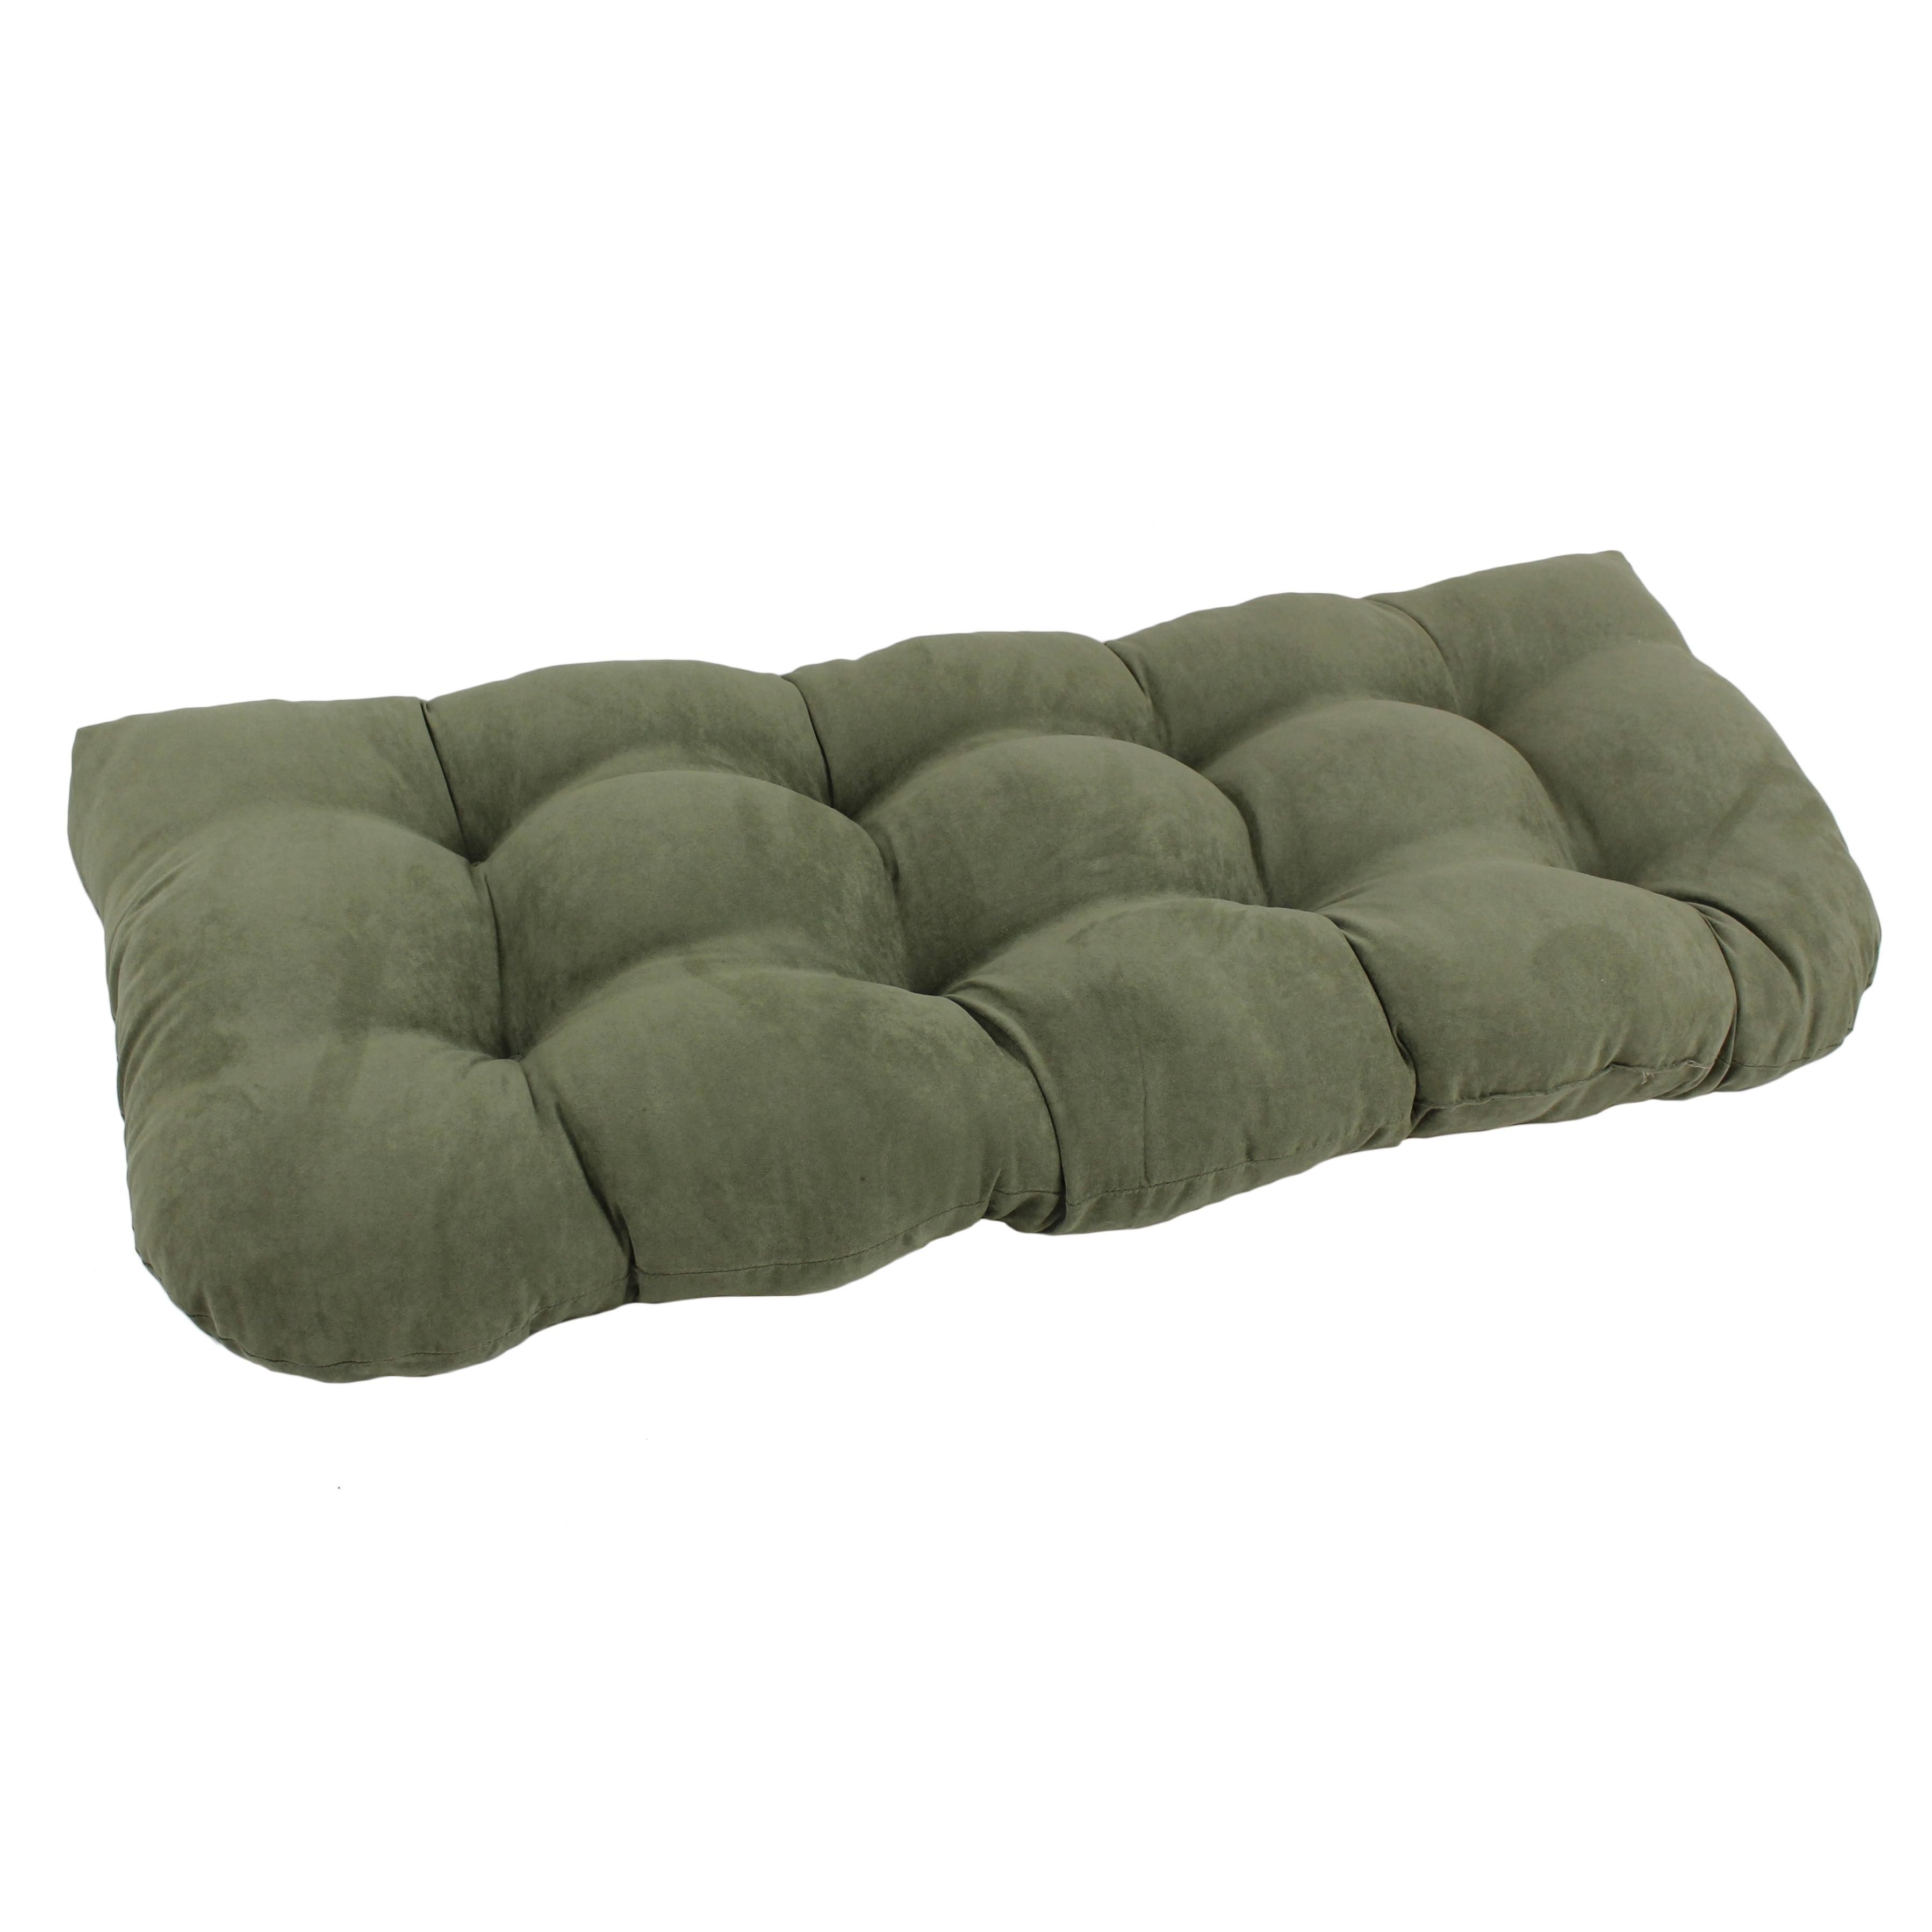 Sage Green 42"x19" Microsuede Tufted U-Shaped Settee/Bench Cushion